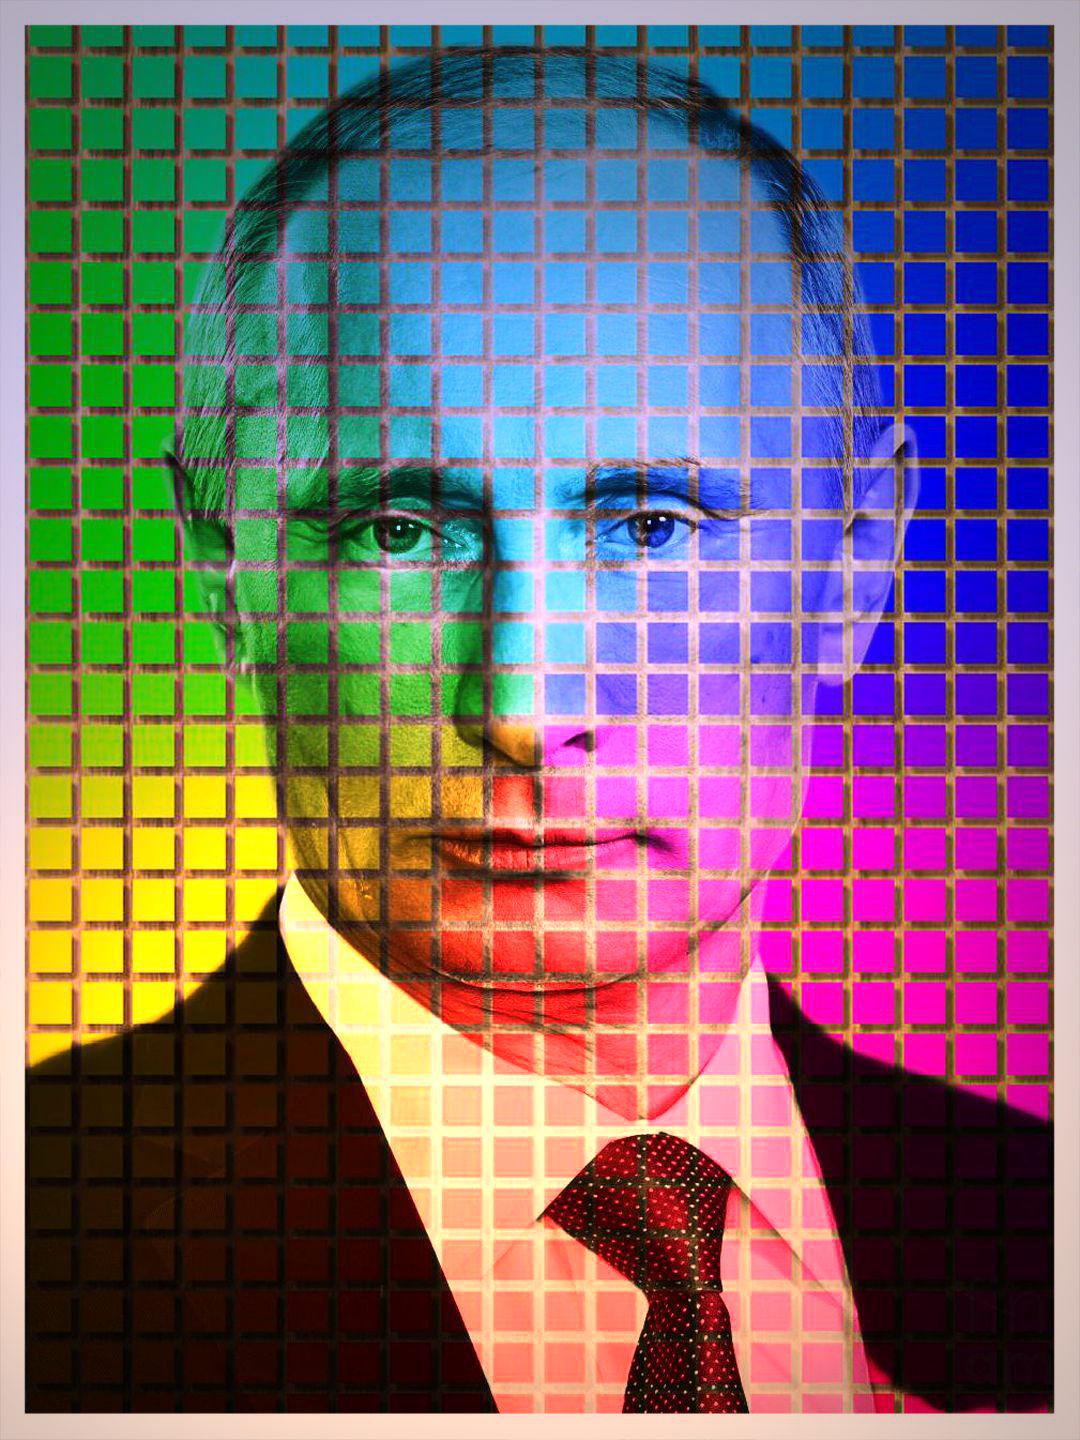 Vladimir Vladimirovich Putin - Celeb ART - Beautiful Artworks of  Celebrities, Footballers, Politicians and Famous People in World | OpenSea